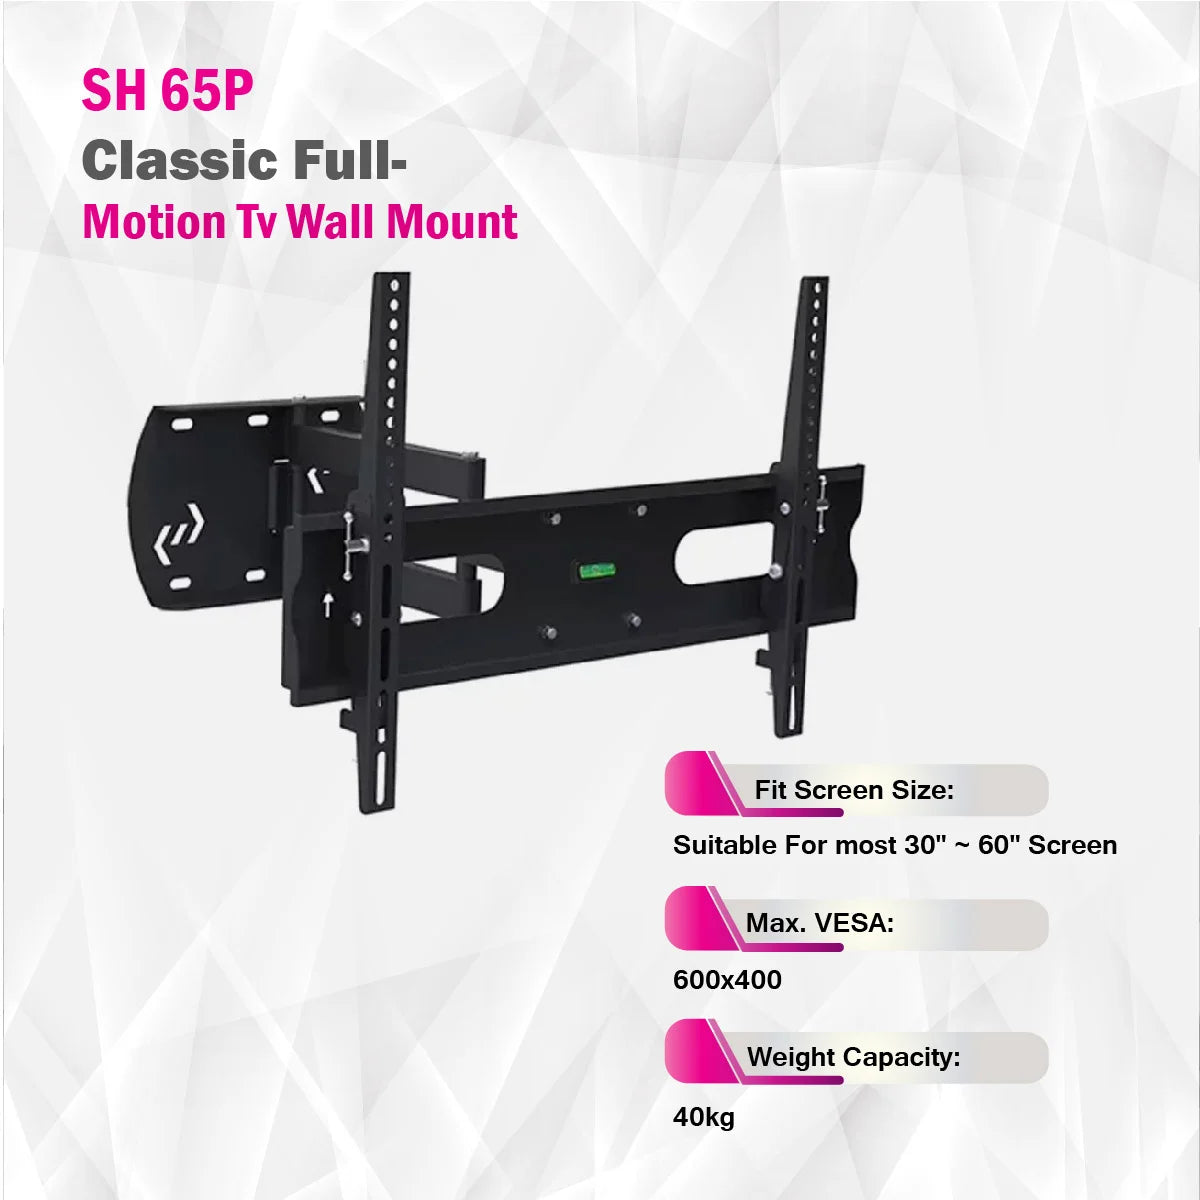 Skill Tech SH 65P - Classic Full-Motion Tv Wall Mount